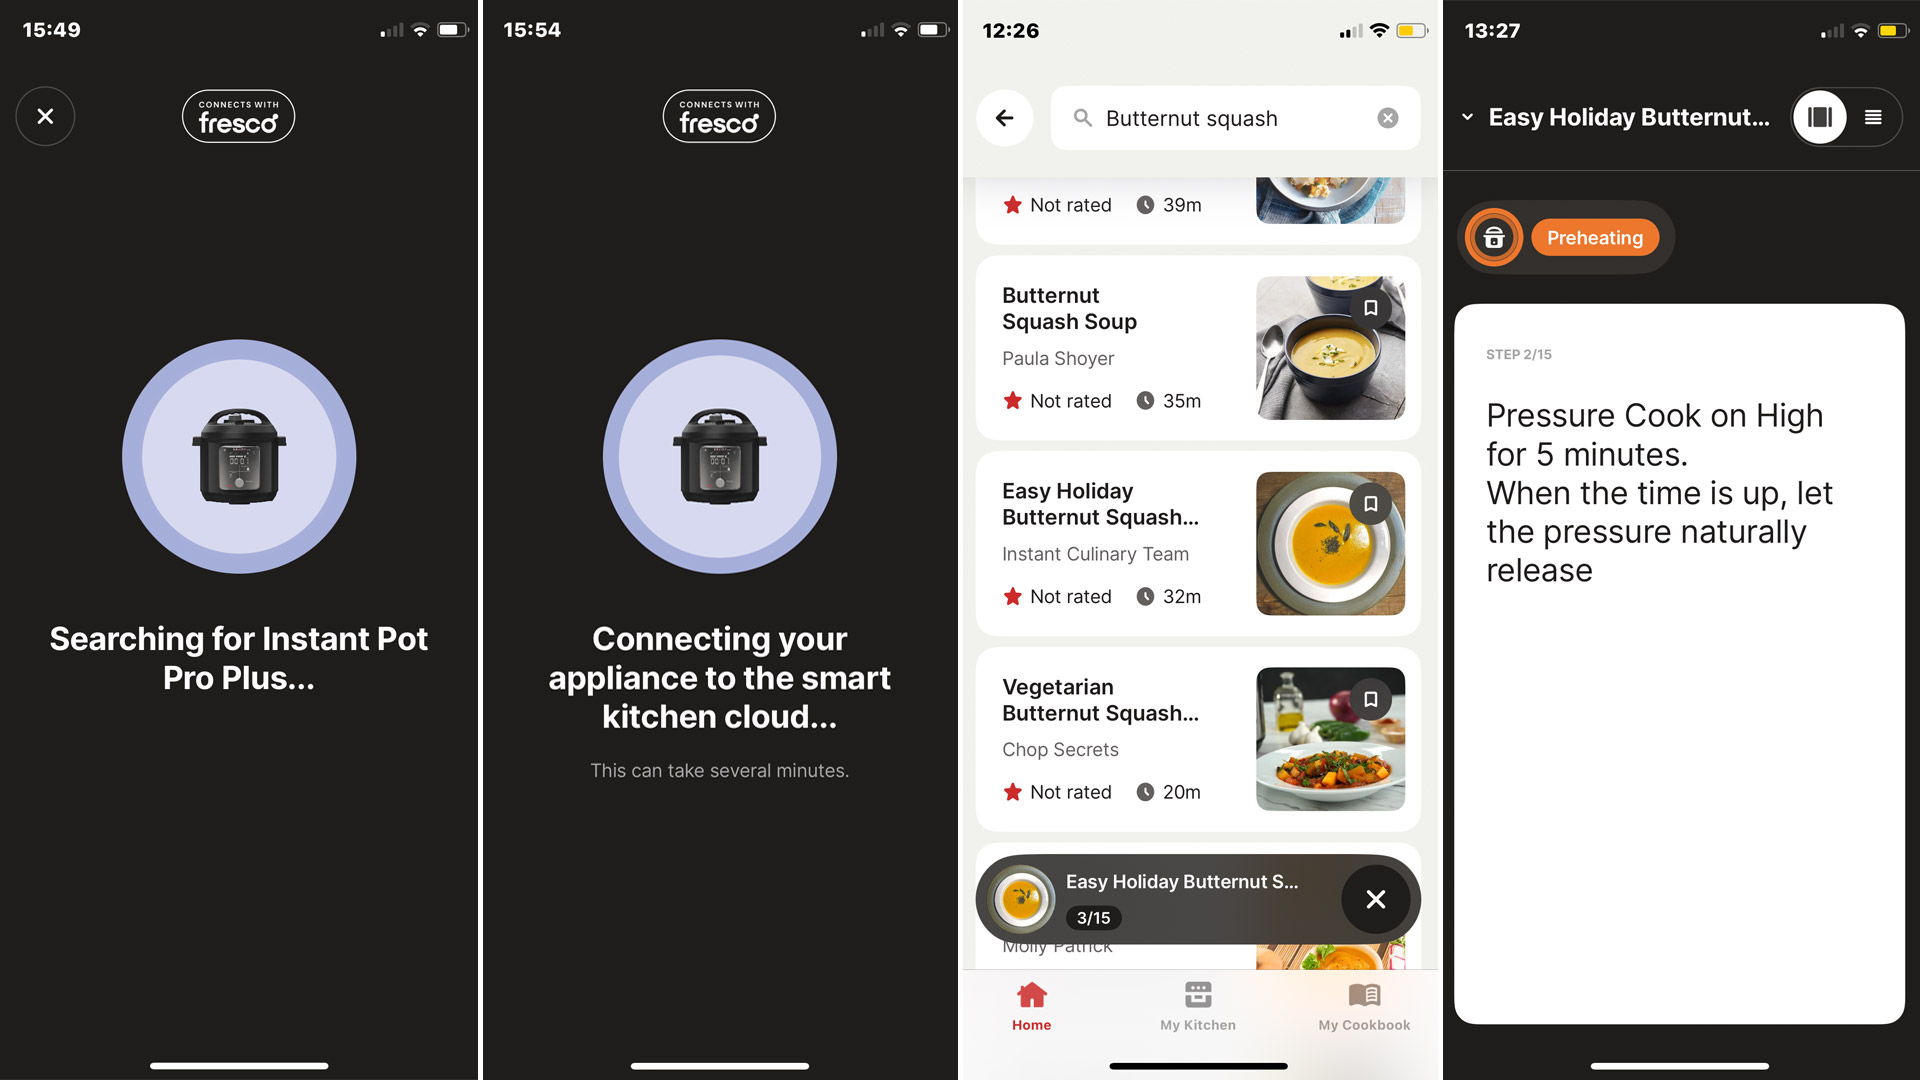 Screenshots of the Instant Pot Pro Plus Smart Multi-Cooker app